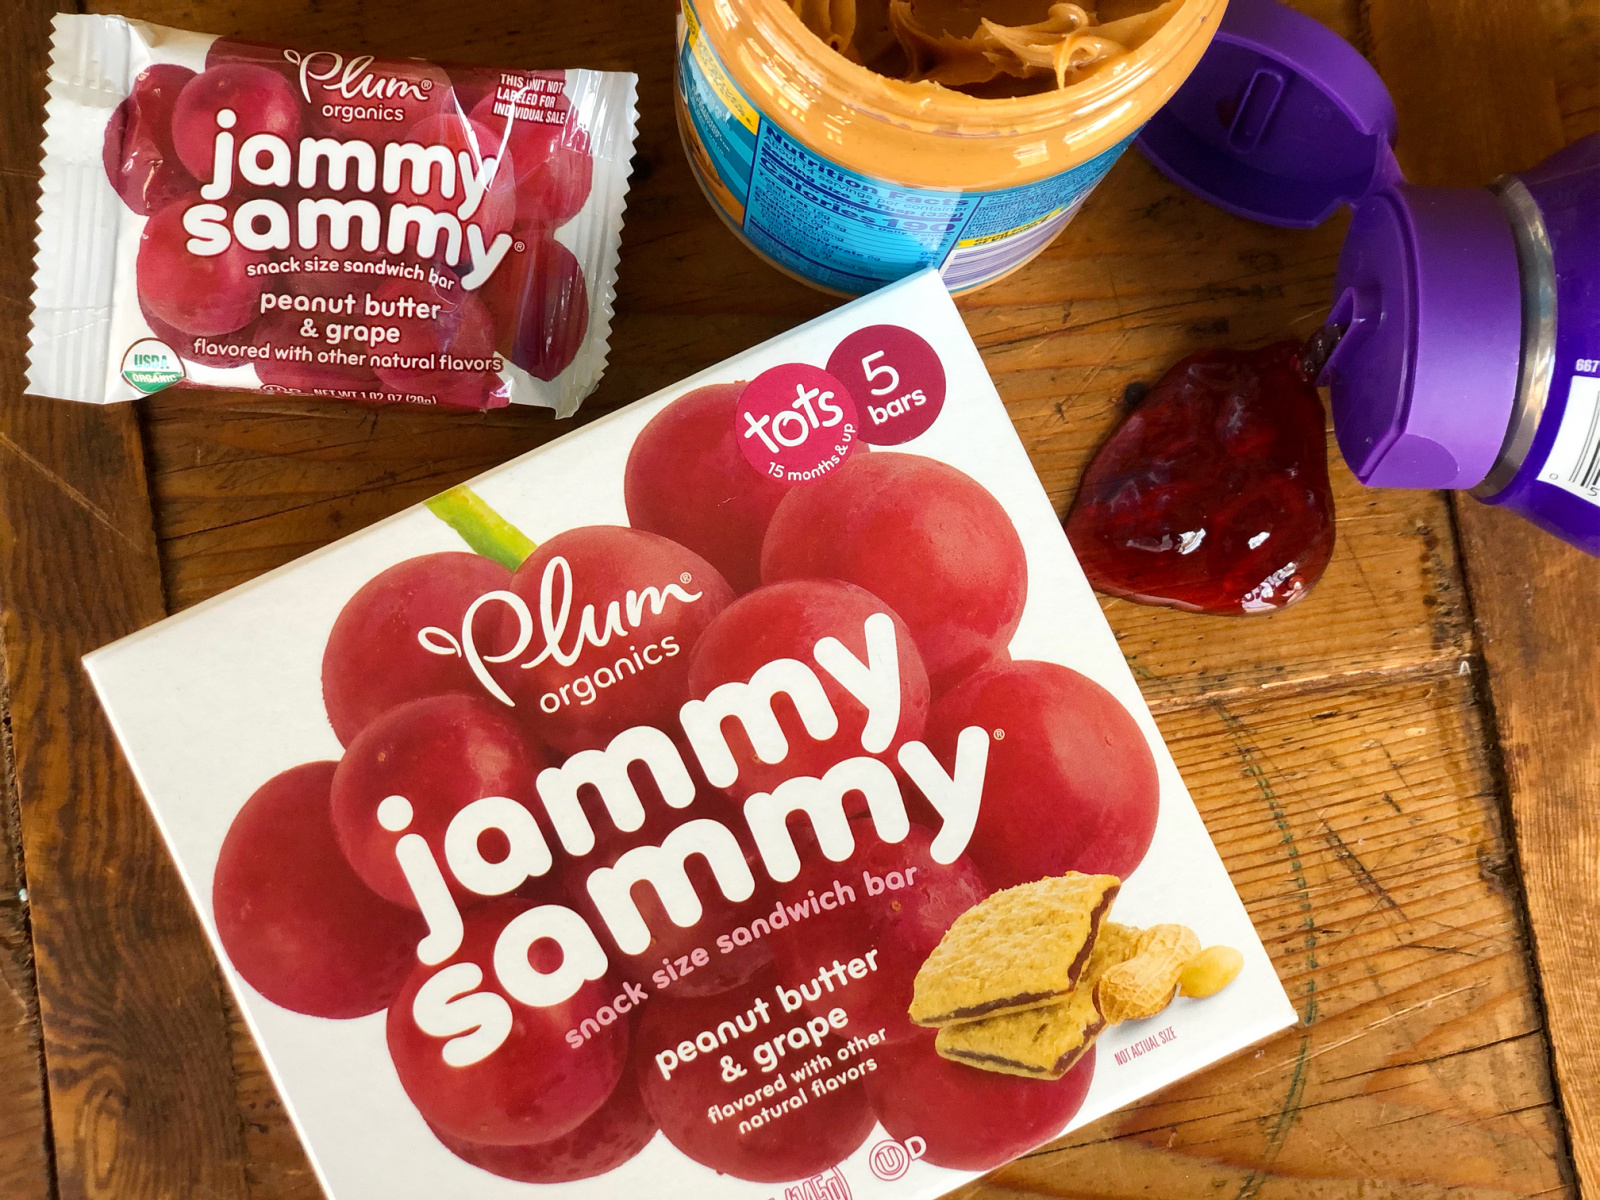 Plum Organics Jammy Sammy 5-Pack Is FREE At Publix on I Heart Publix